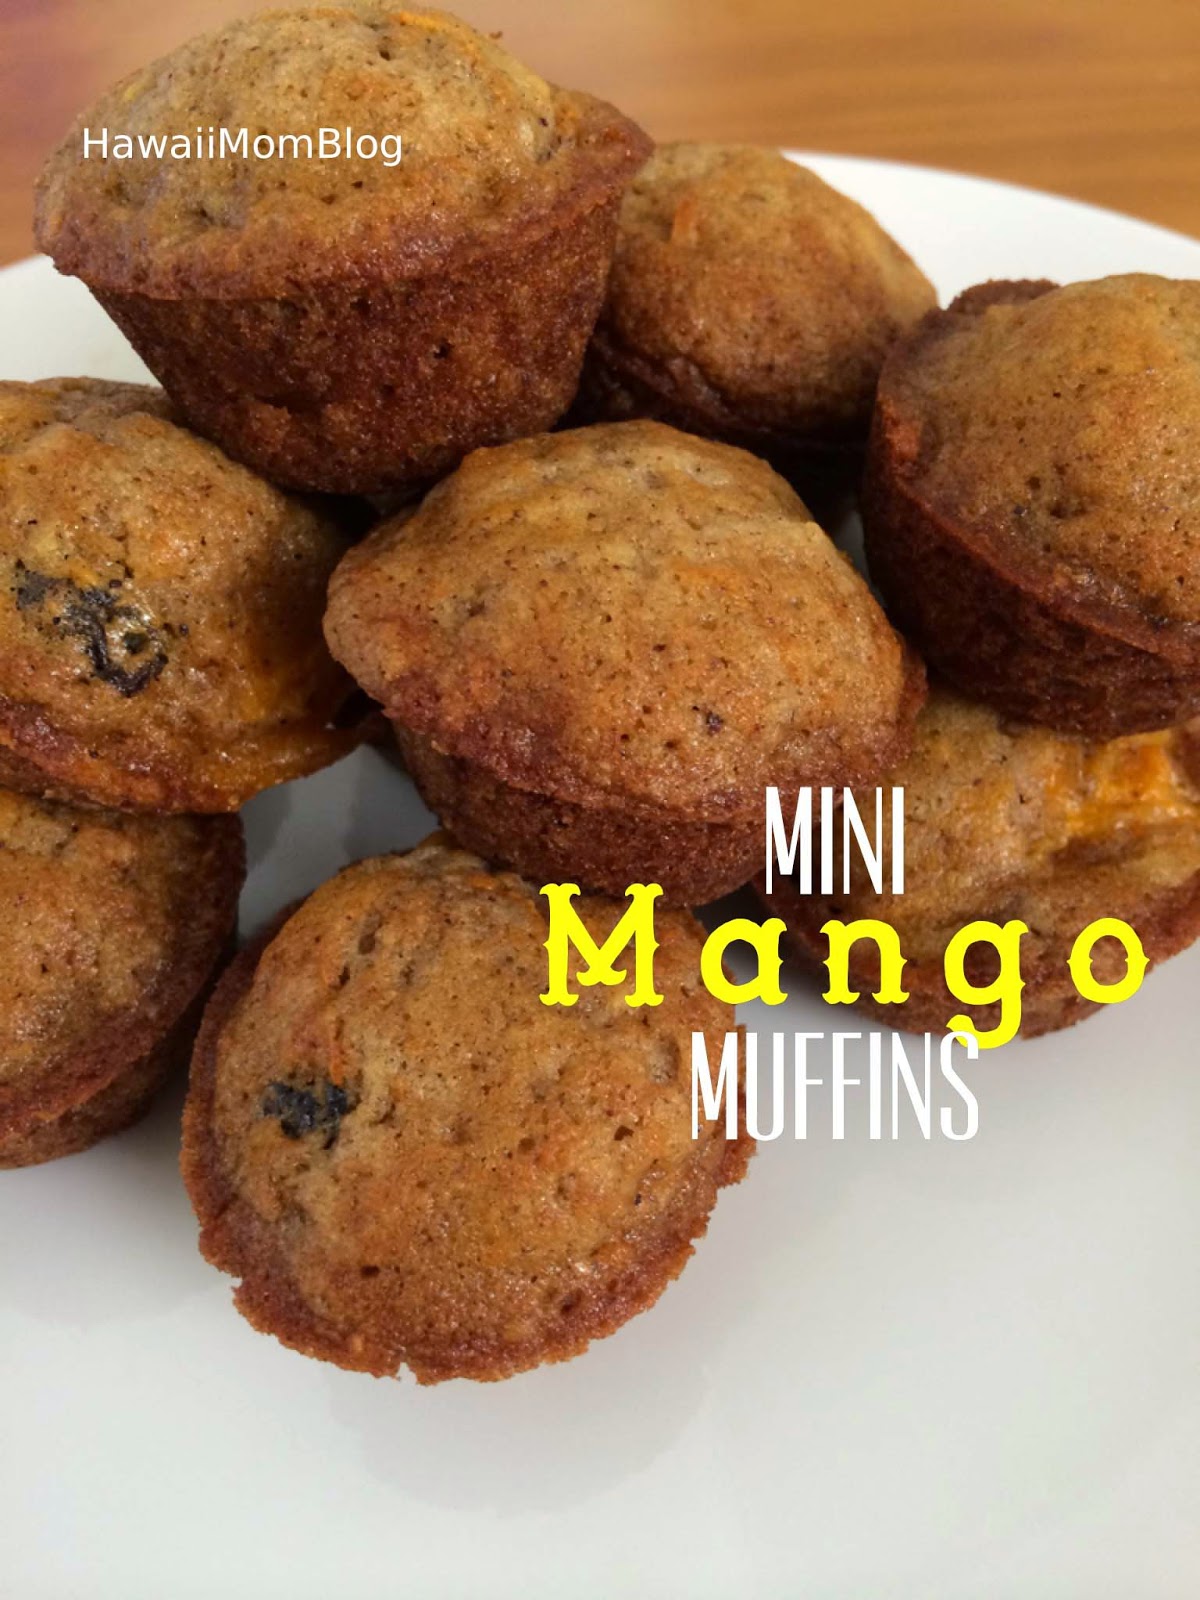 Hawaii Mom Blog: Mango Muffins Recipe